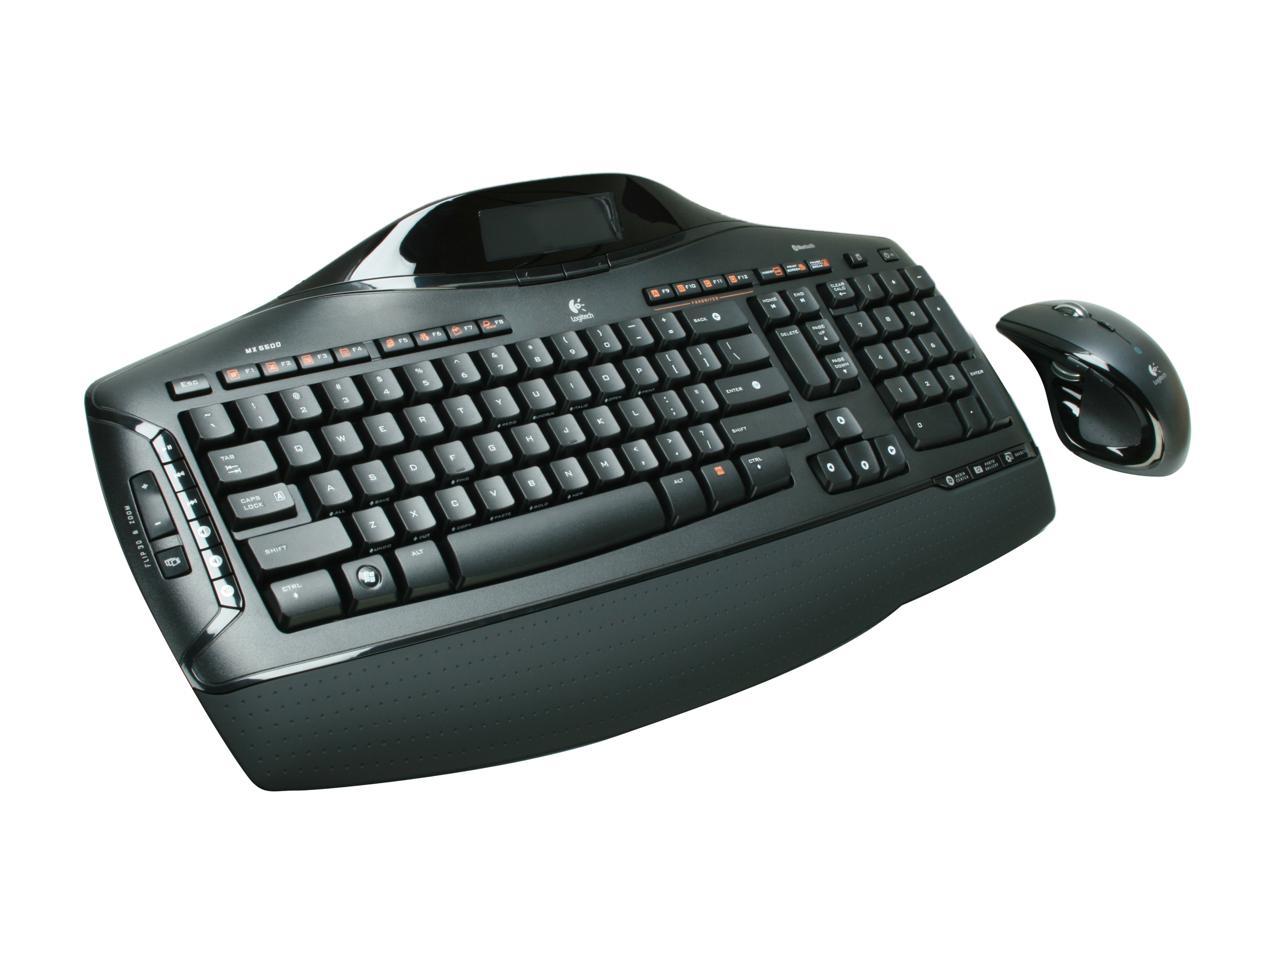 Logitech MX 5500 Revolution Black Cordless Cordless Desktop keyboard & Mouse Kit Newegg.com